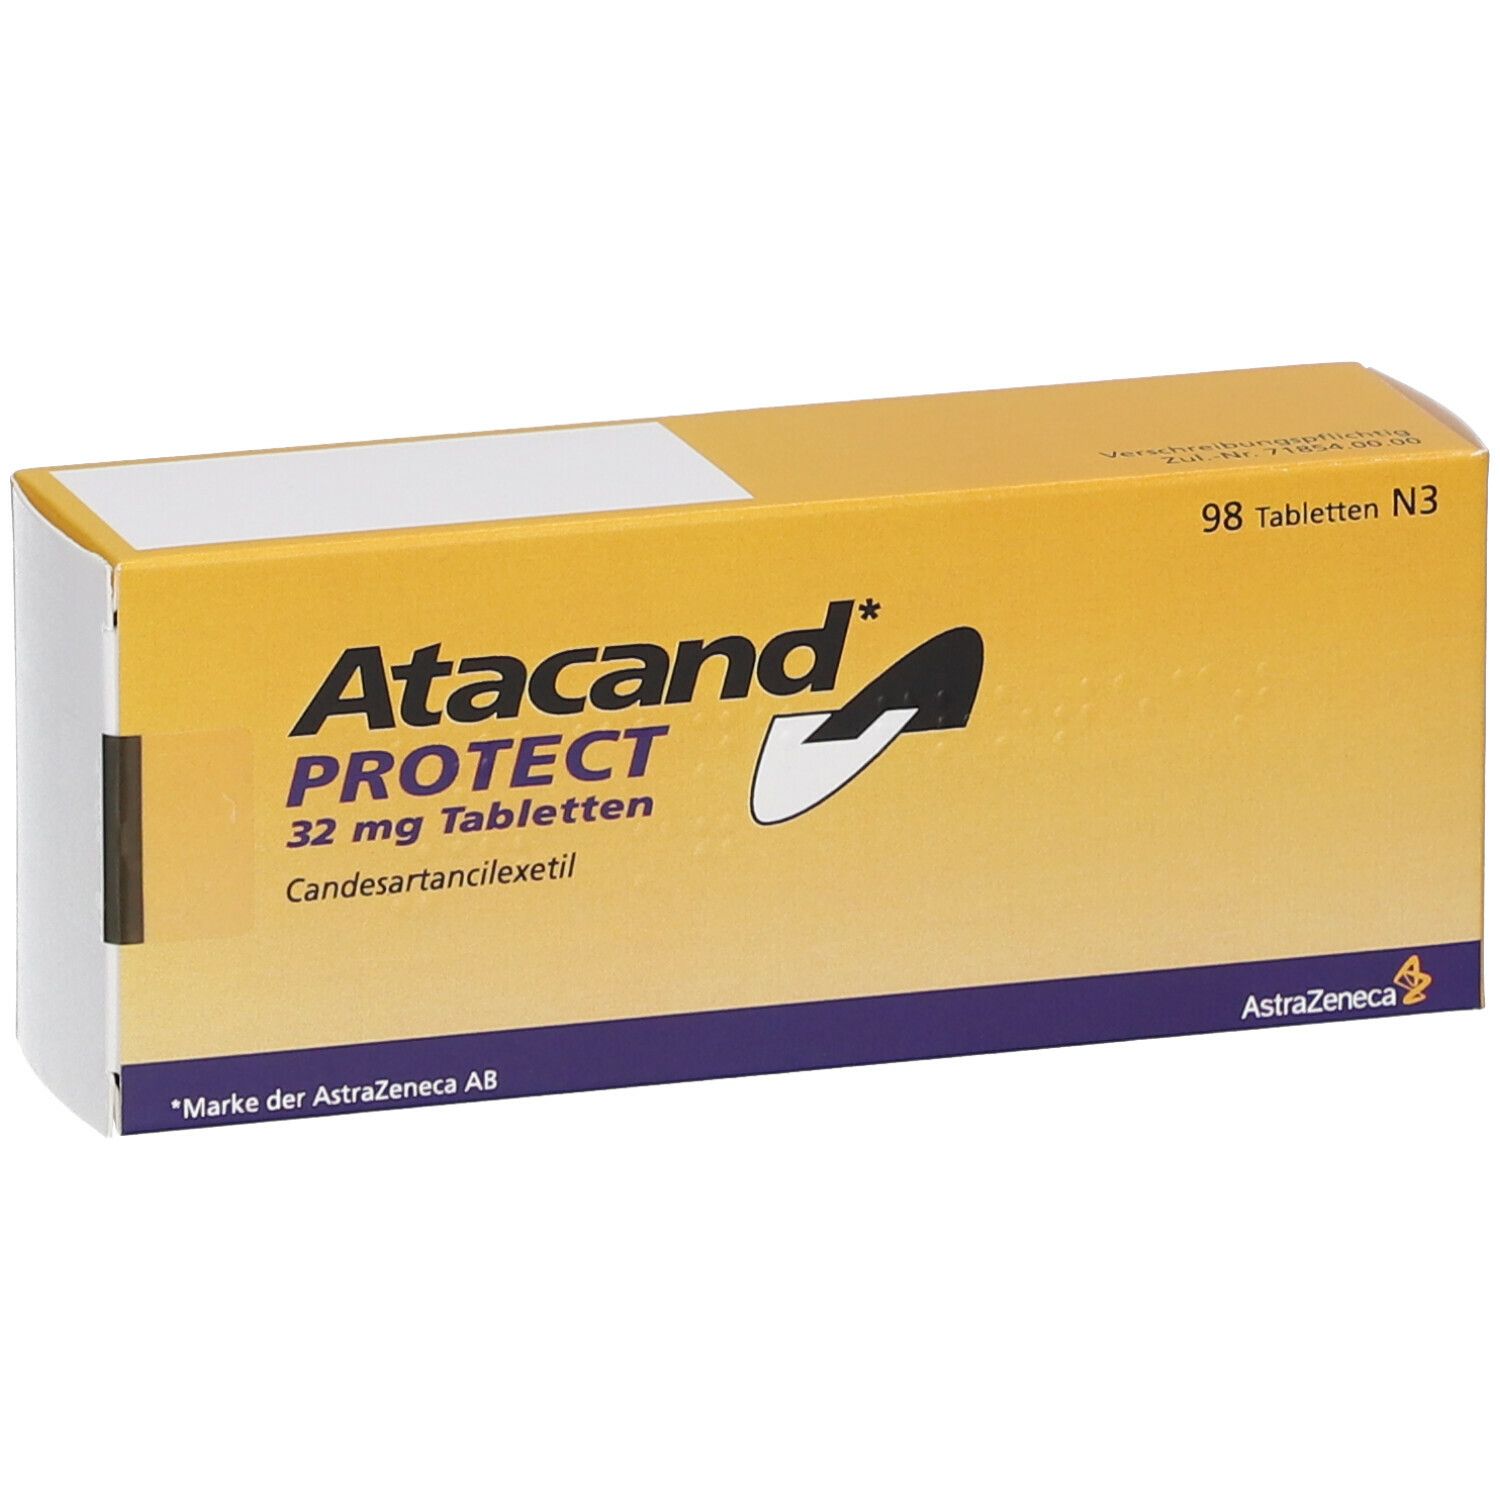 Atacand Protect 32 mg